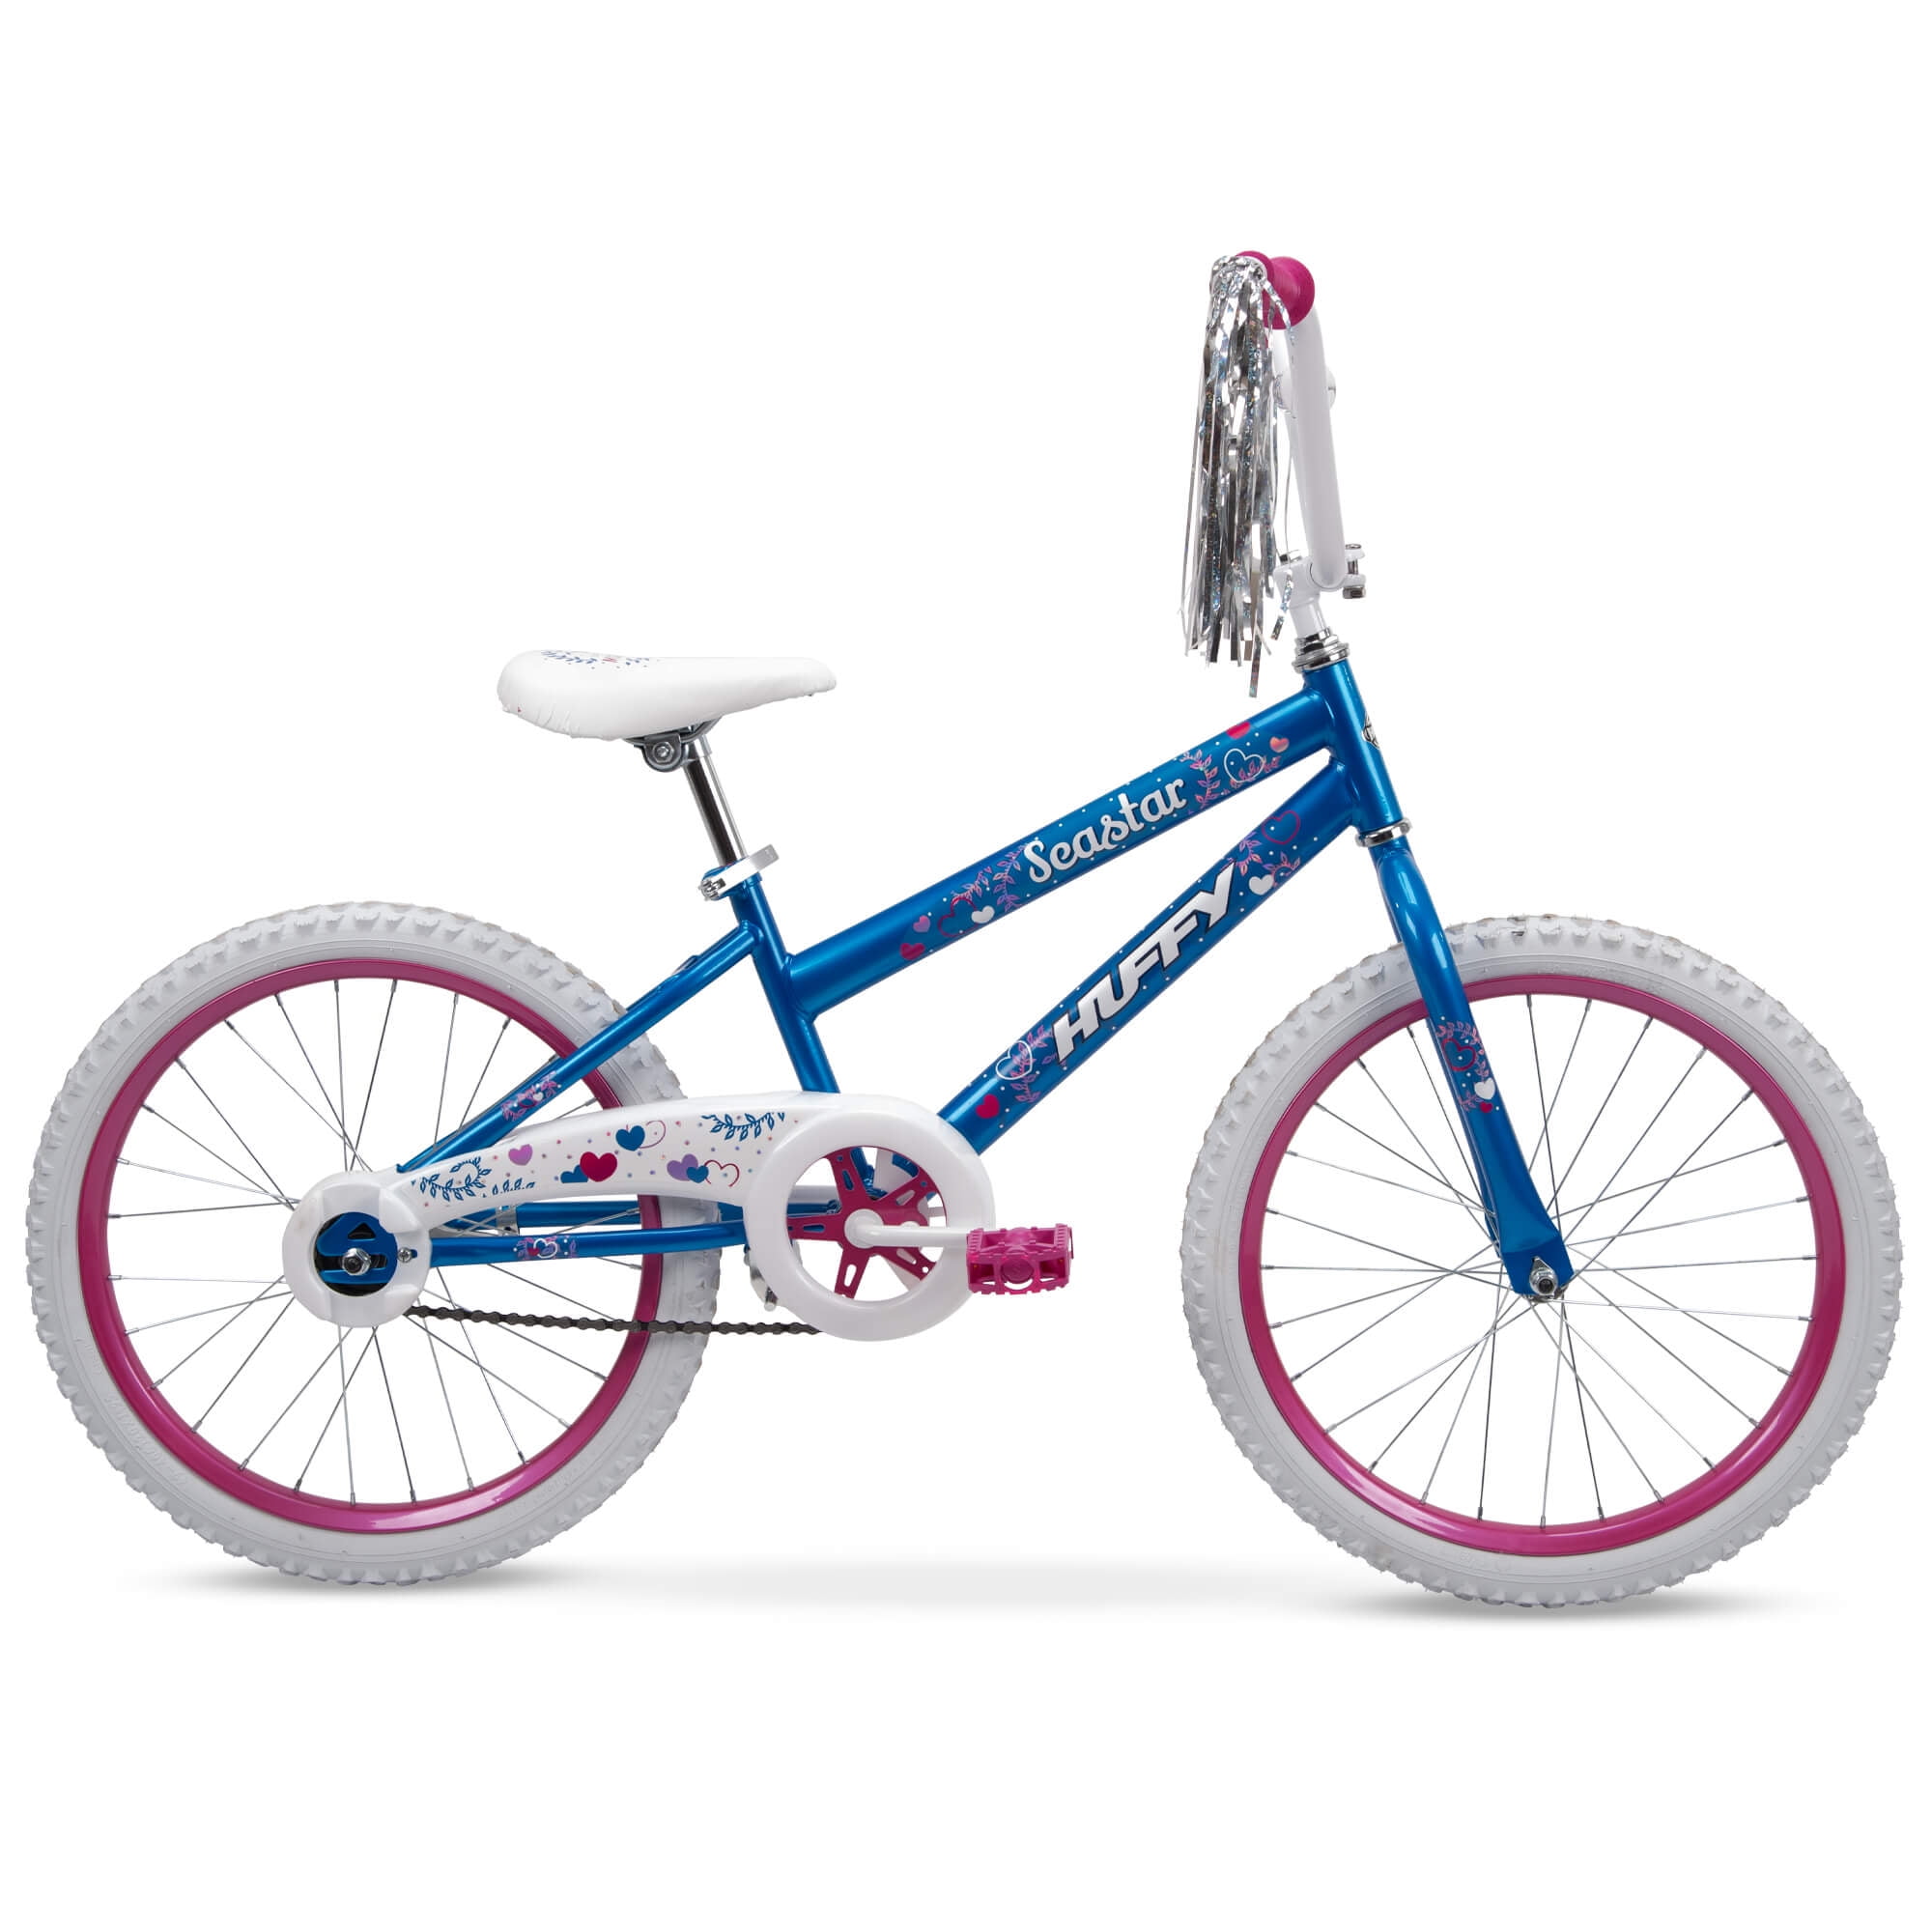 Huffy 20-Inch Rock It Boys Bike Royal Blue Gloss Durable Steel Bicycle 